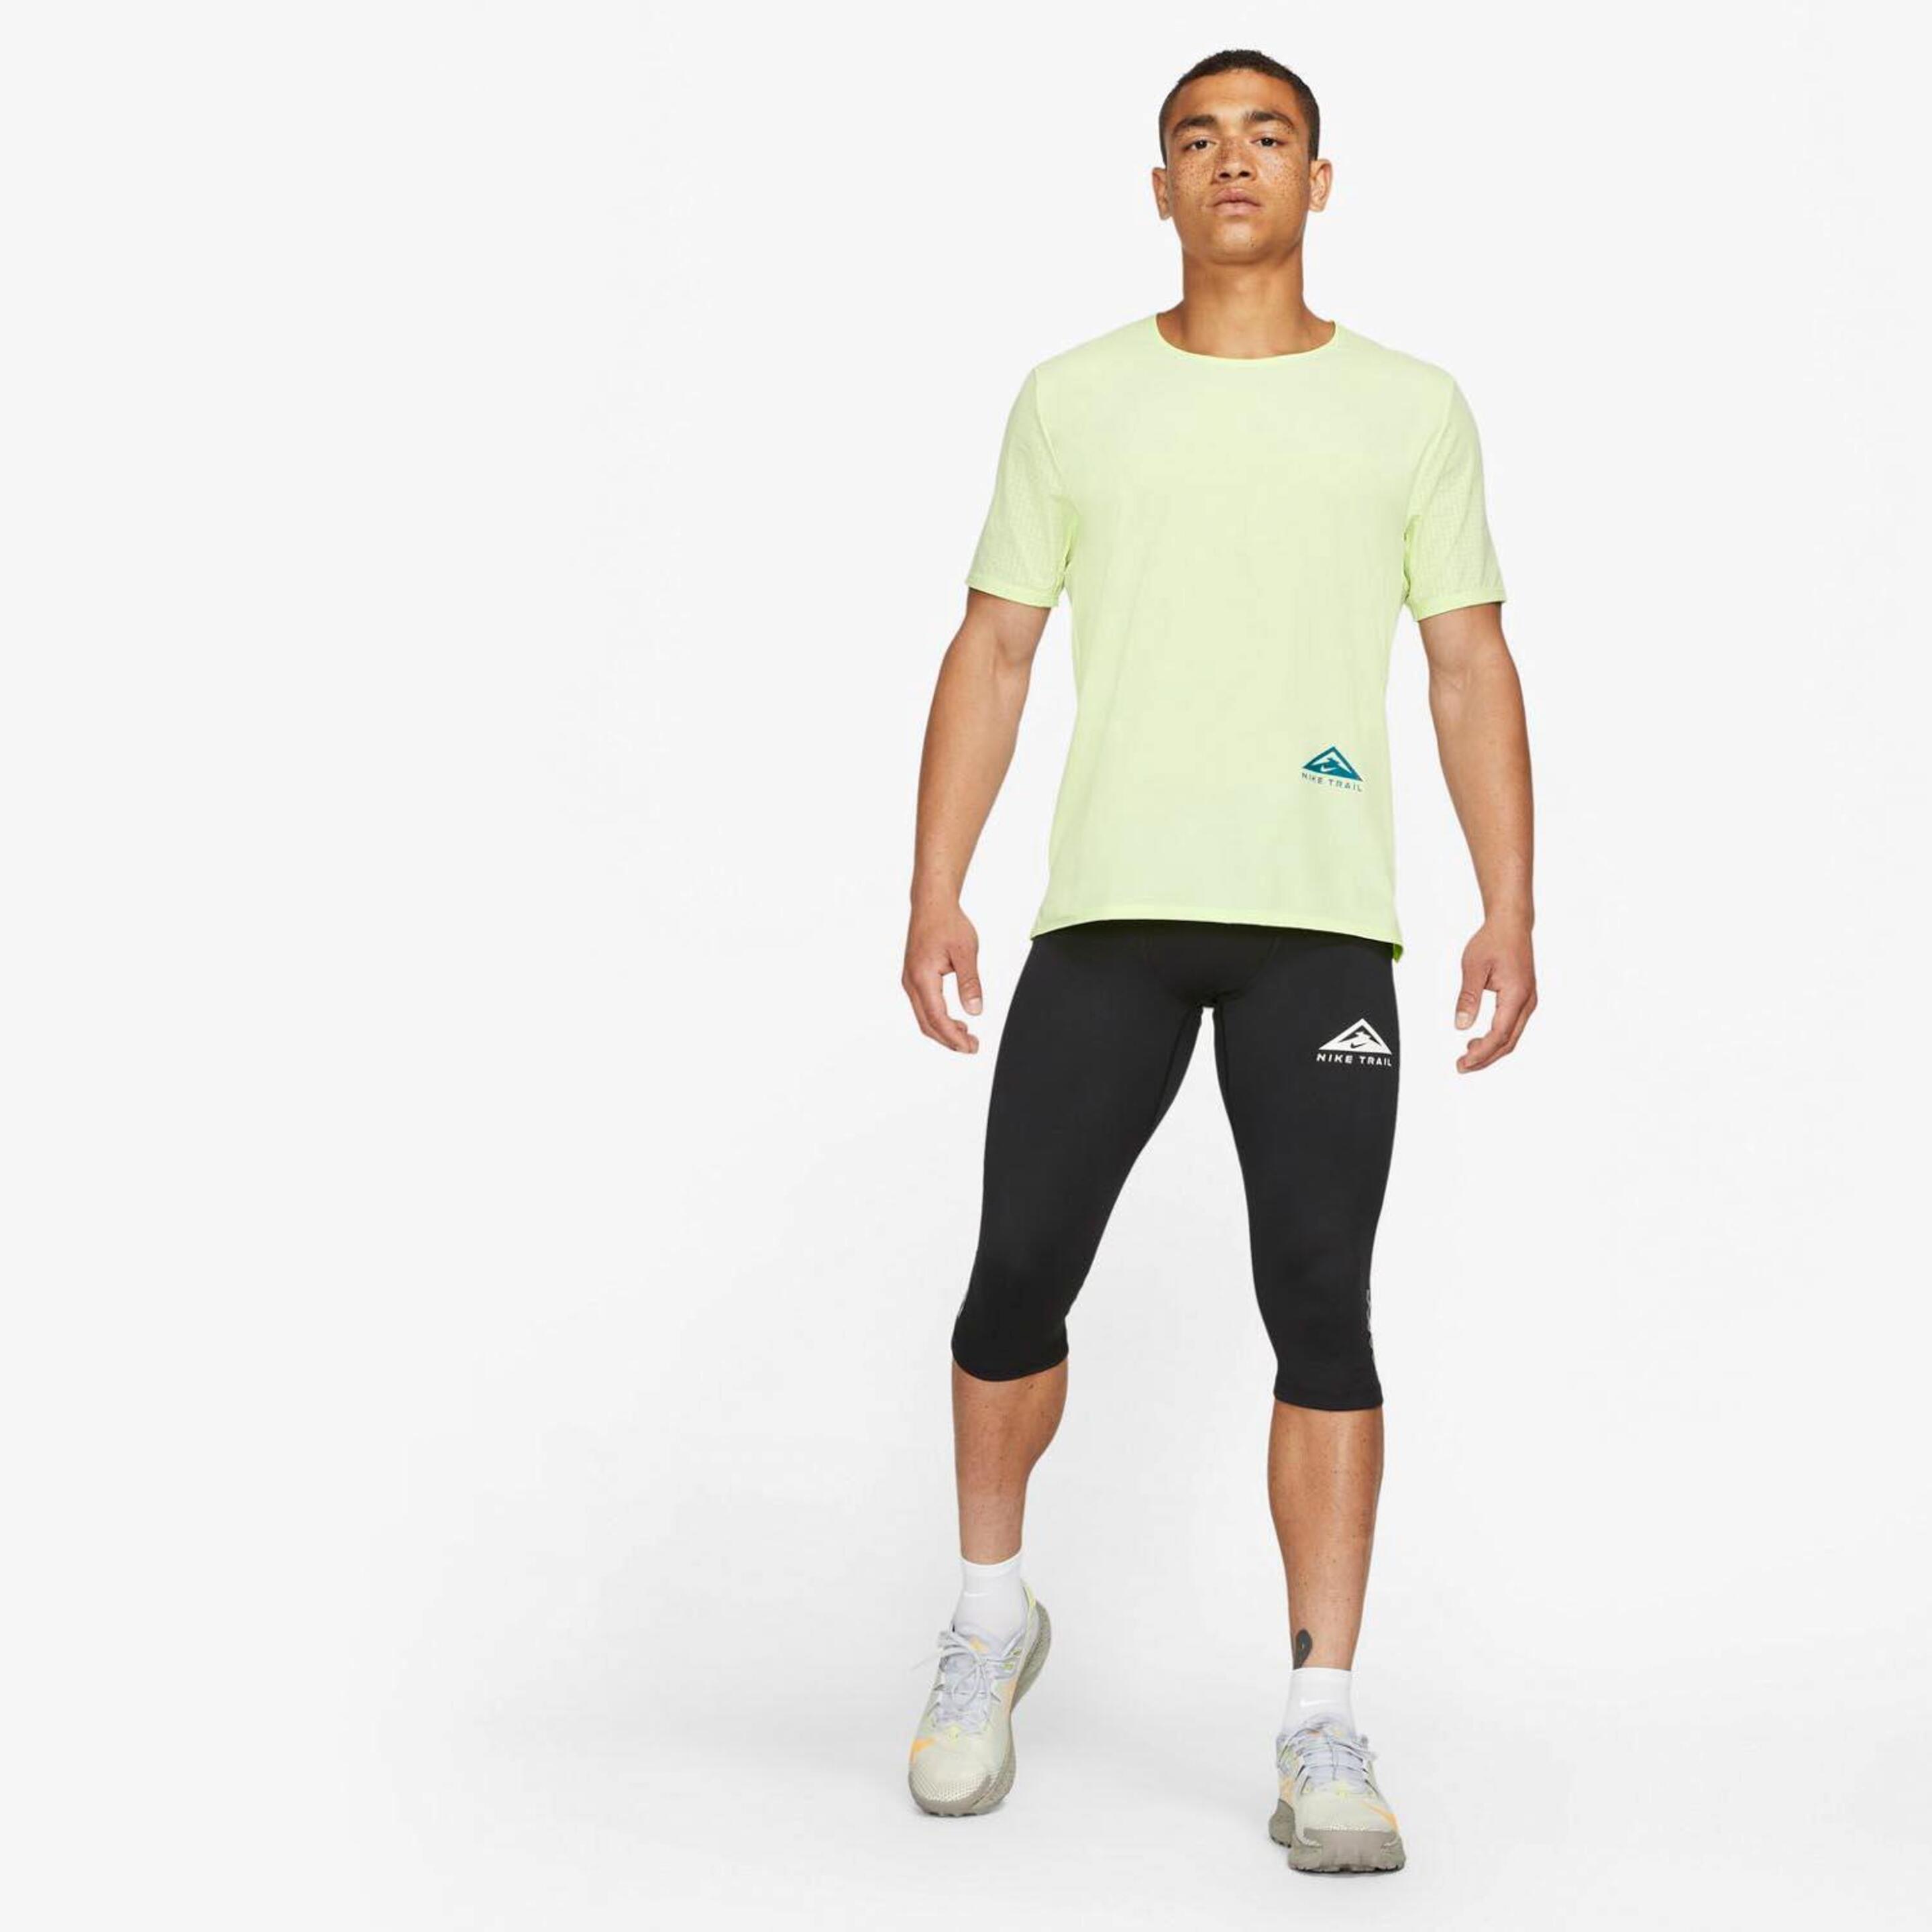 T-shirt Nike Trail Rise Dri-fit